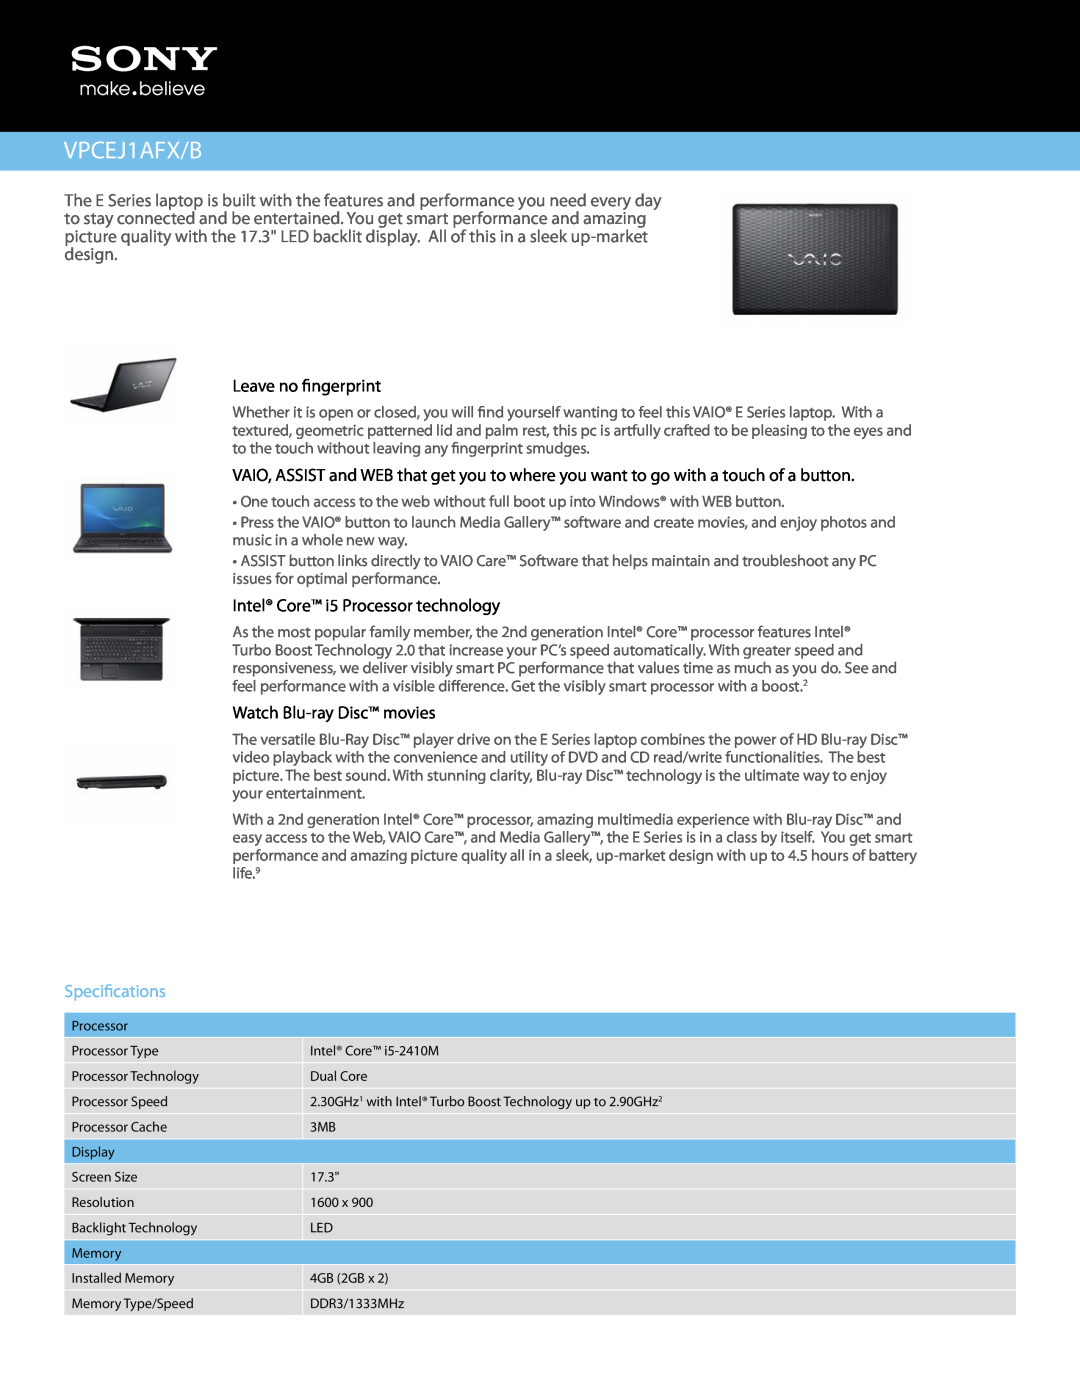 Sony VPCEJ1AFX/B manual Leave no fingerprint, Intel Core i5 Processor technology, Watch Blu-ray Disc movies 